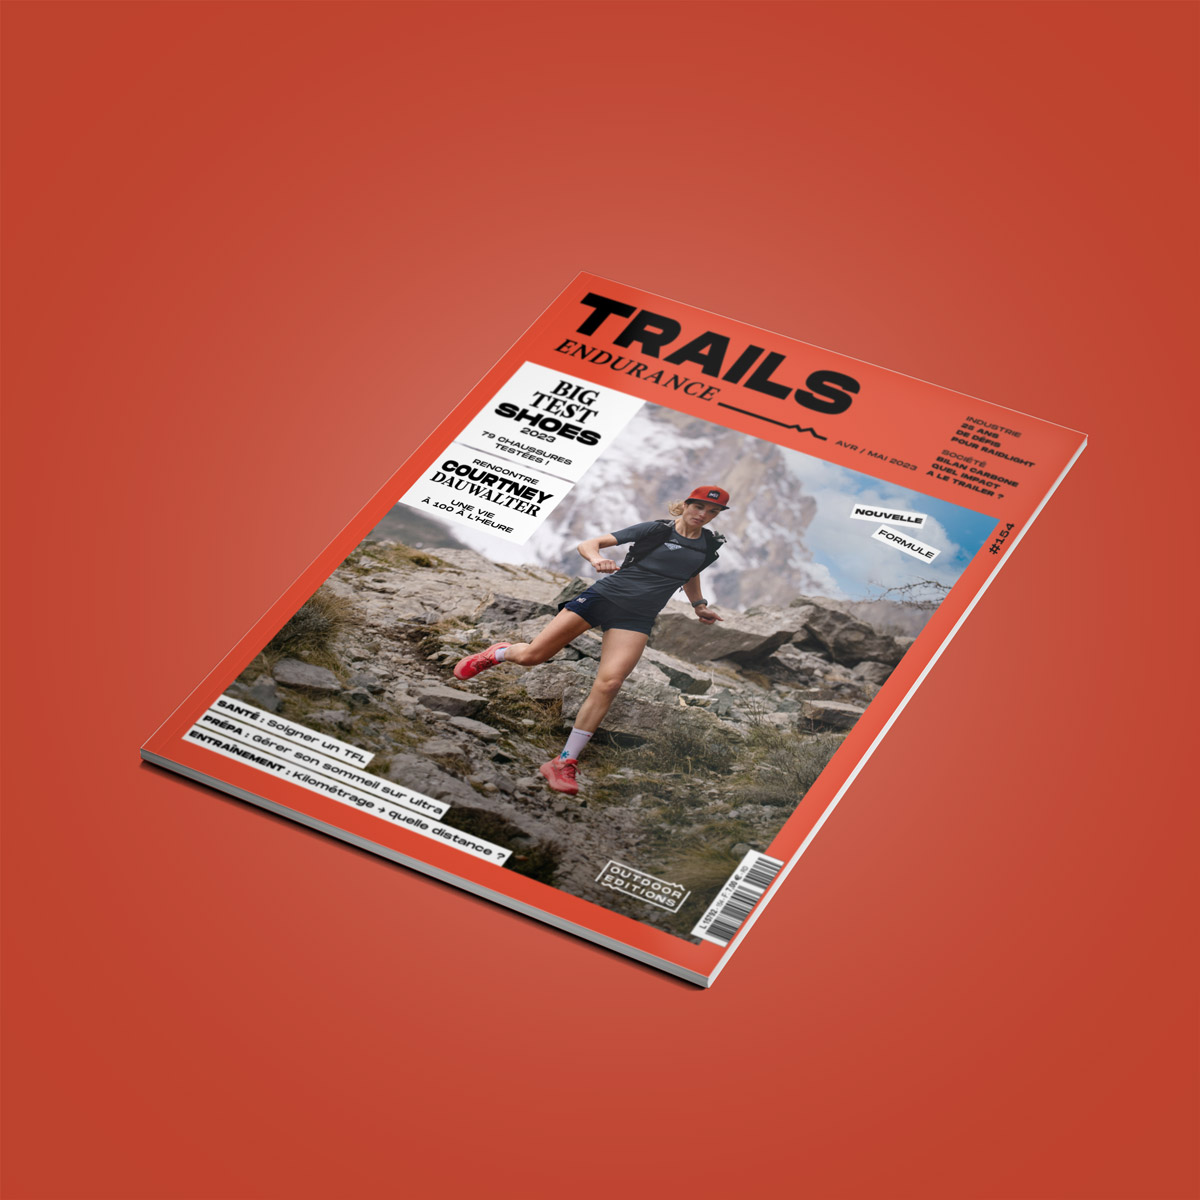 Quelle frontale choisir ? - Trails Endurance Magazine